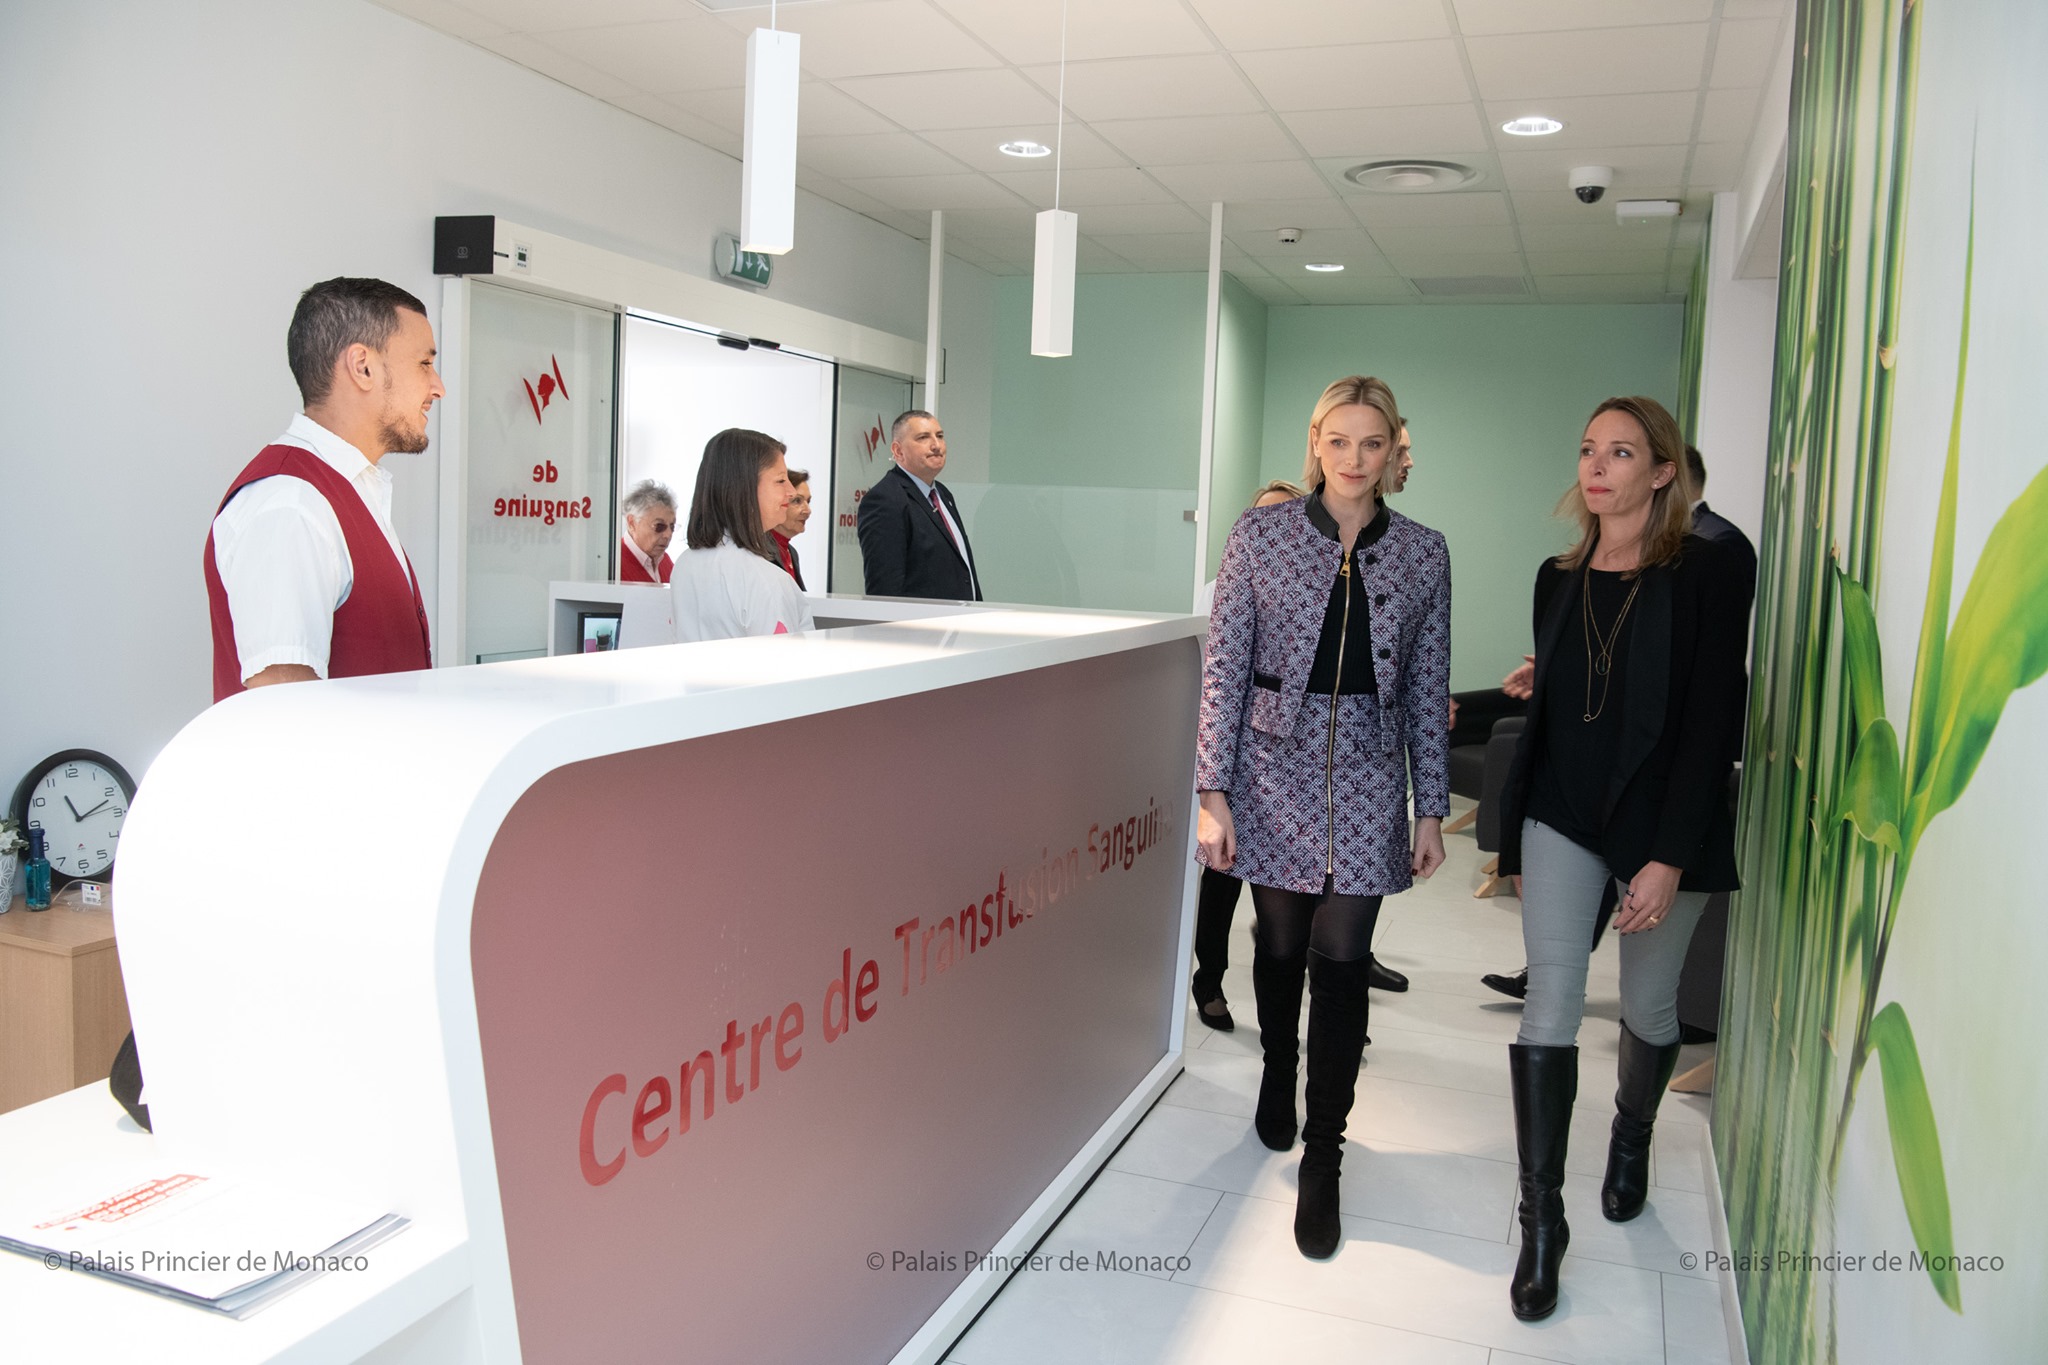 Princess Charlene visits the Princess Grace Hospital in LV December 2019